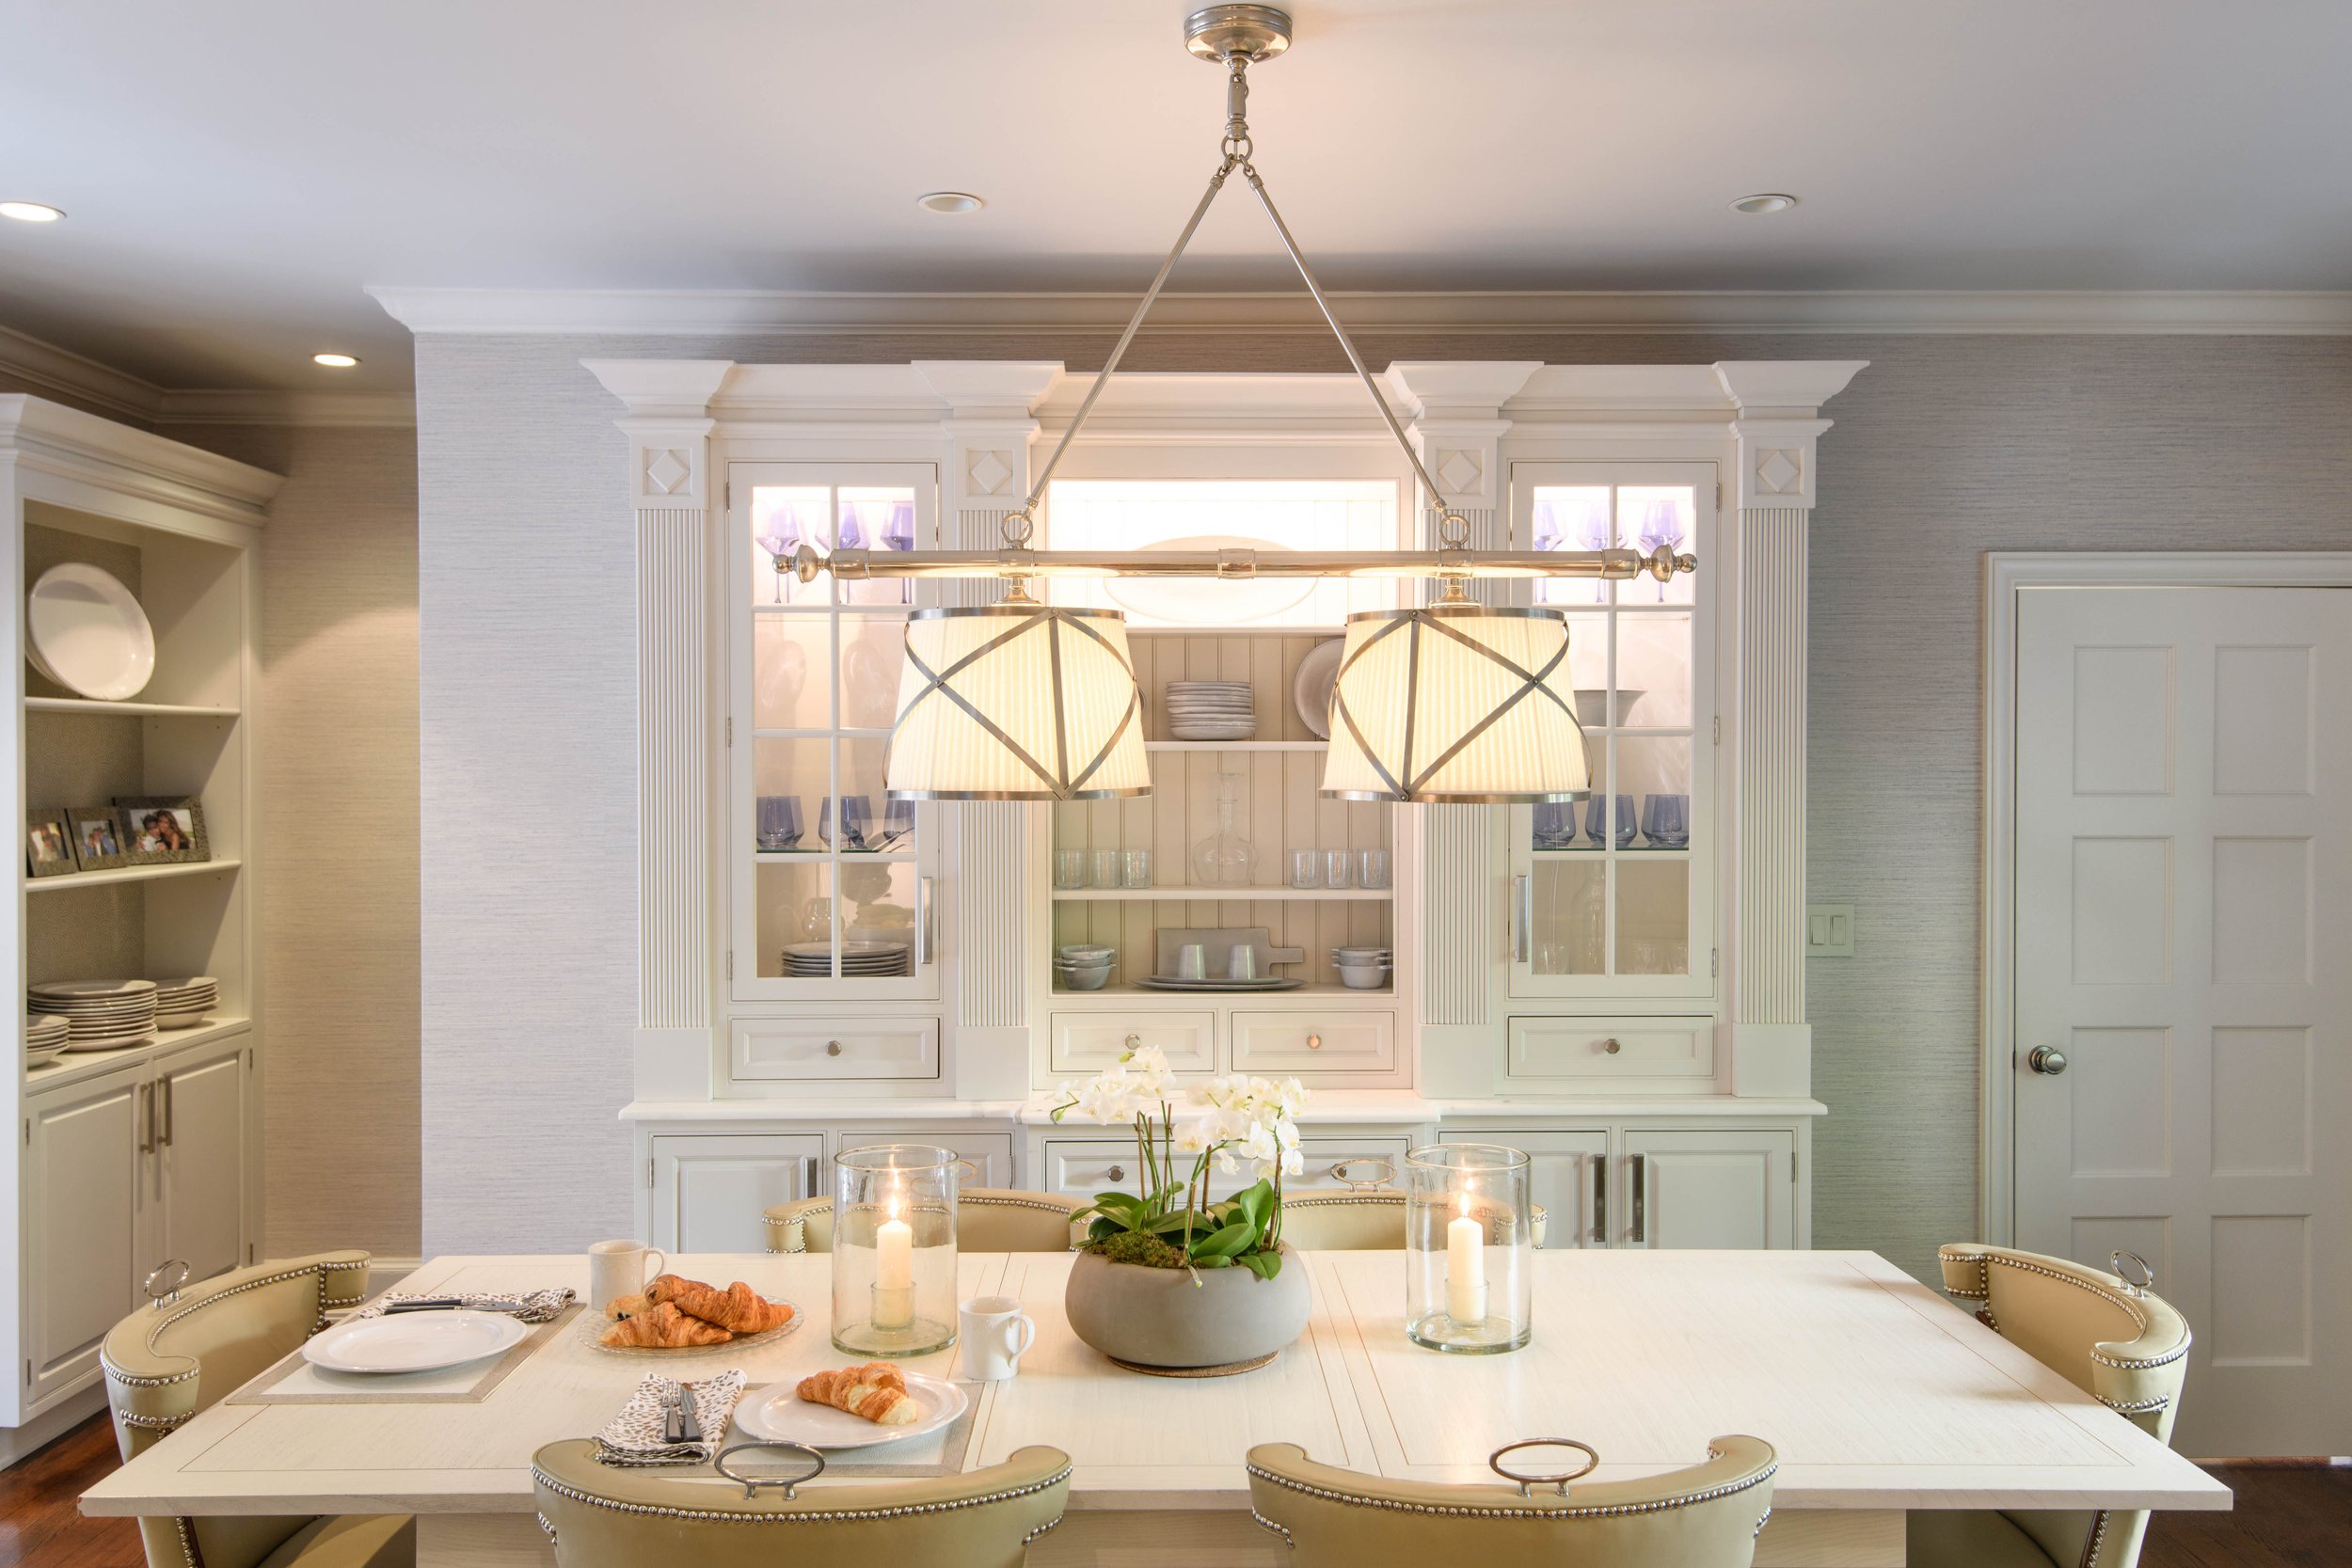 12-dining-area-eggshell-white-warm-cool-light-classy-cabinets-westechester-rinfret-interior-designs.jpg